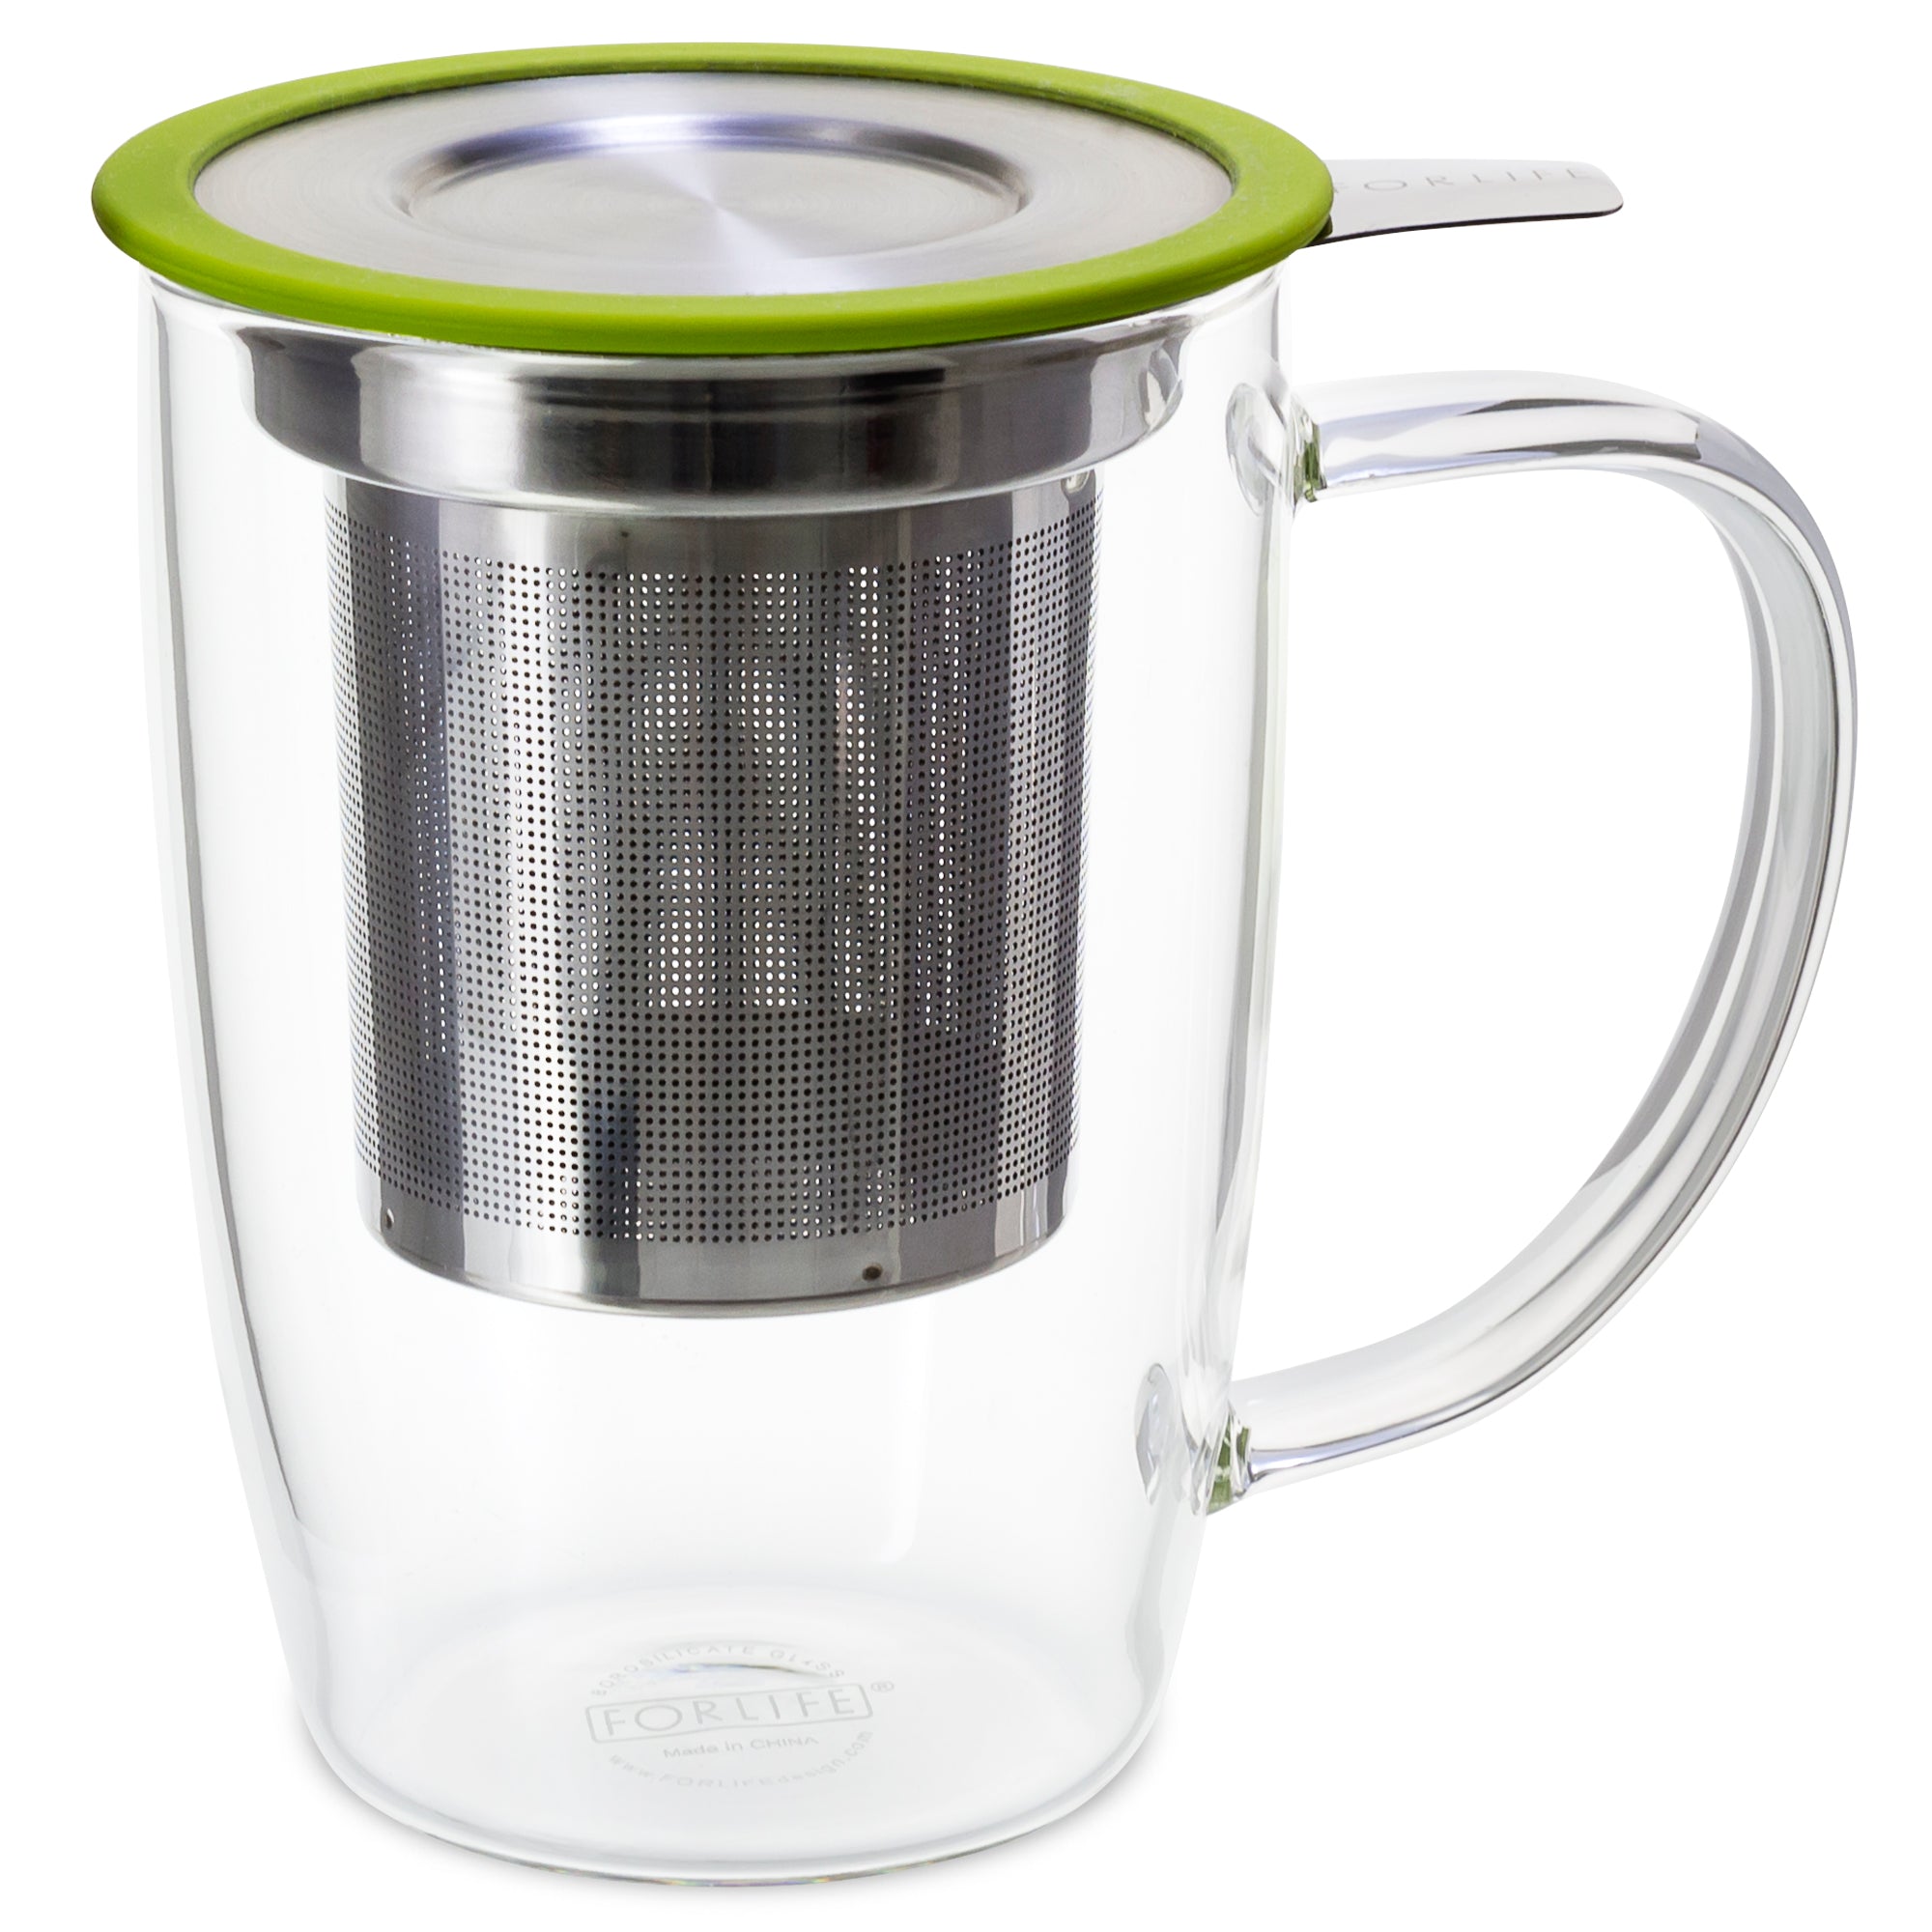 Buy Yera Tea/Coffee Glass Mug Set Online at Best Price of Rs 229